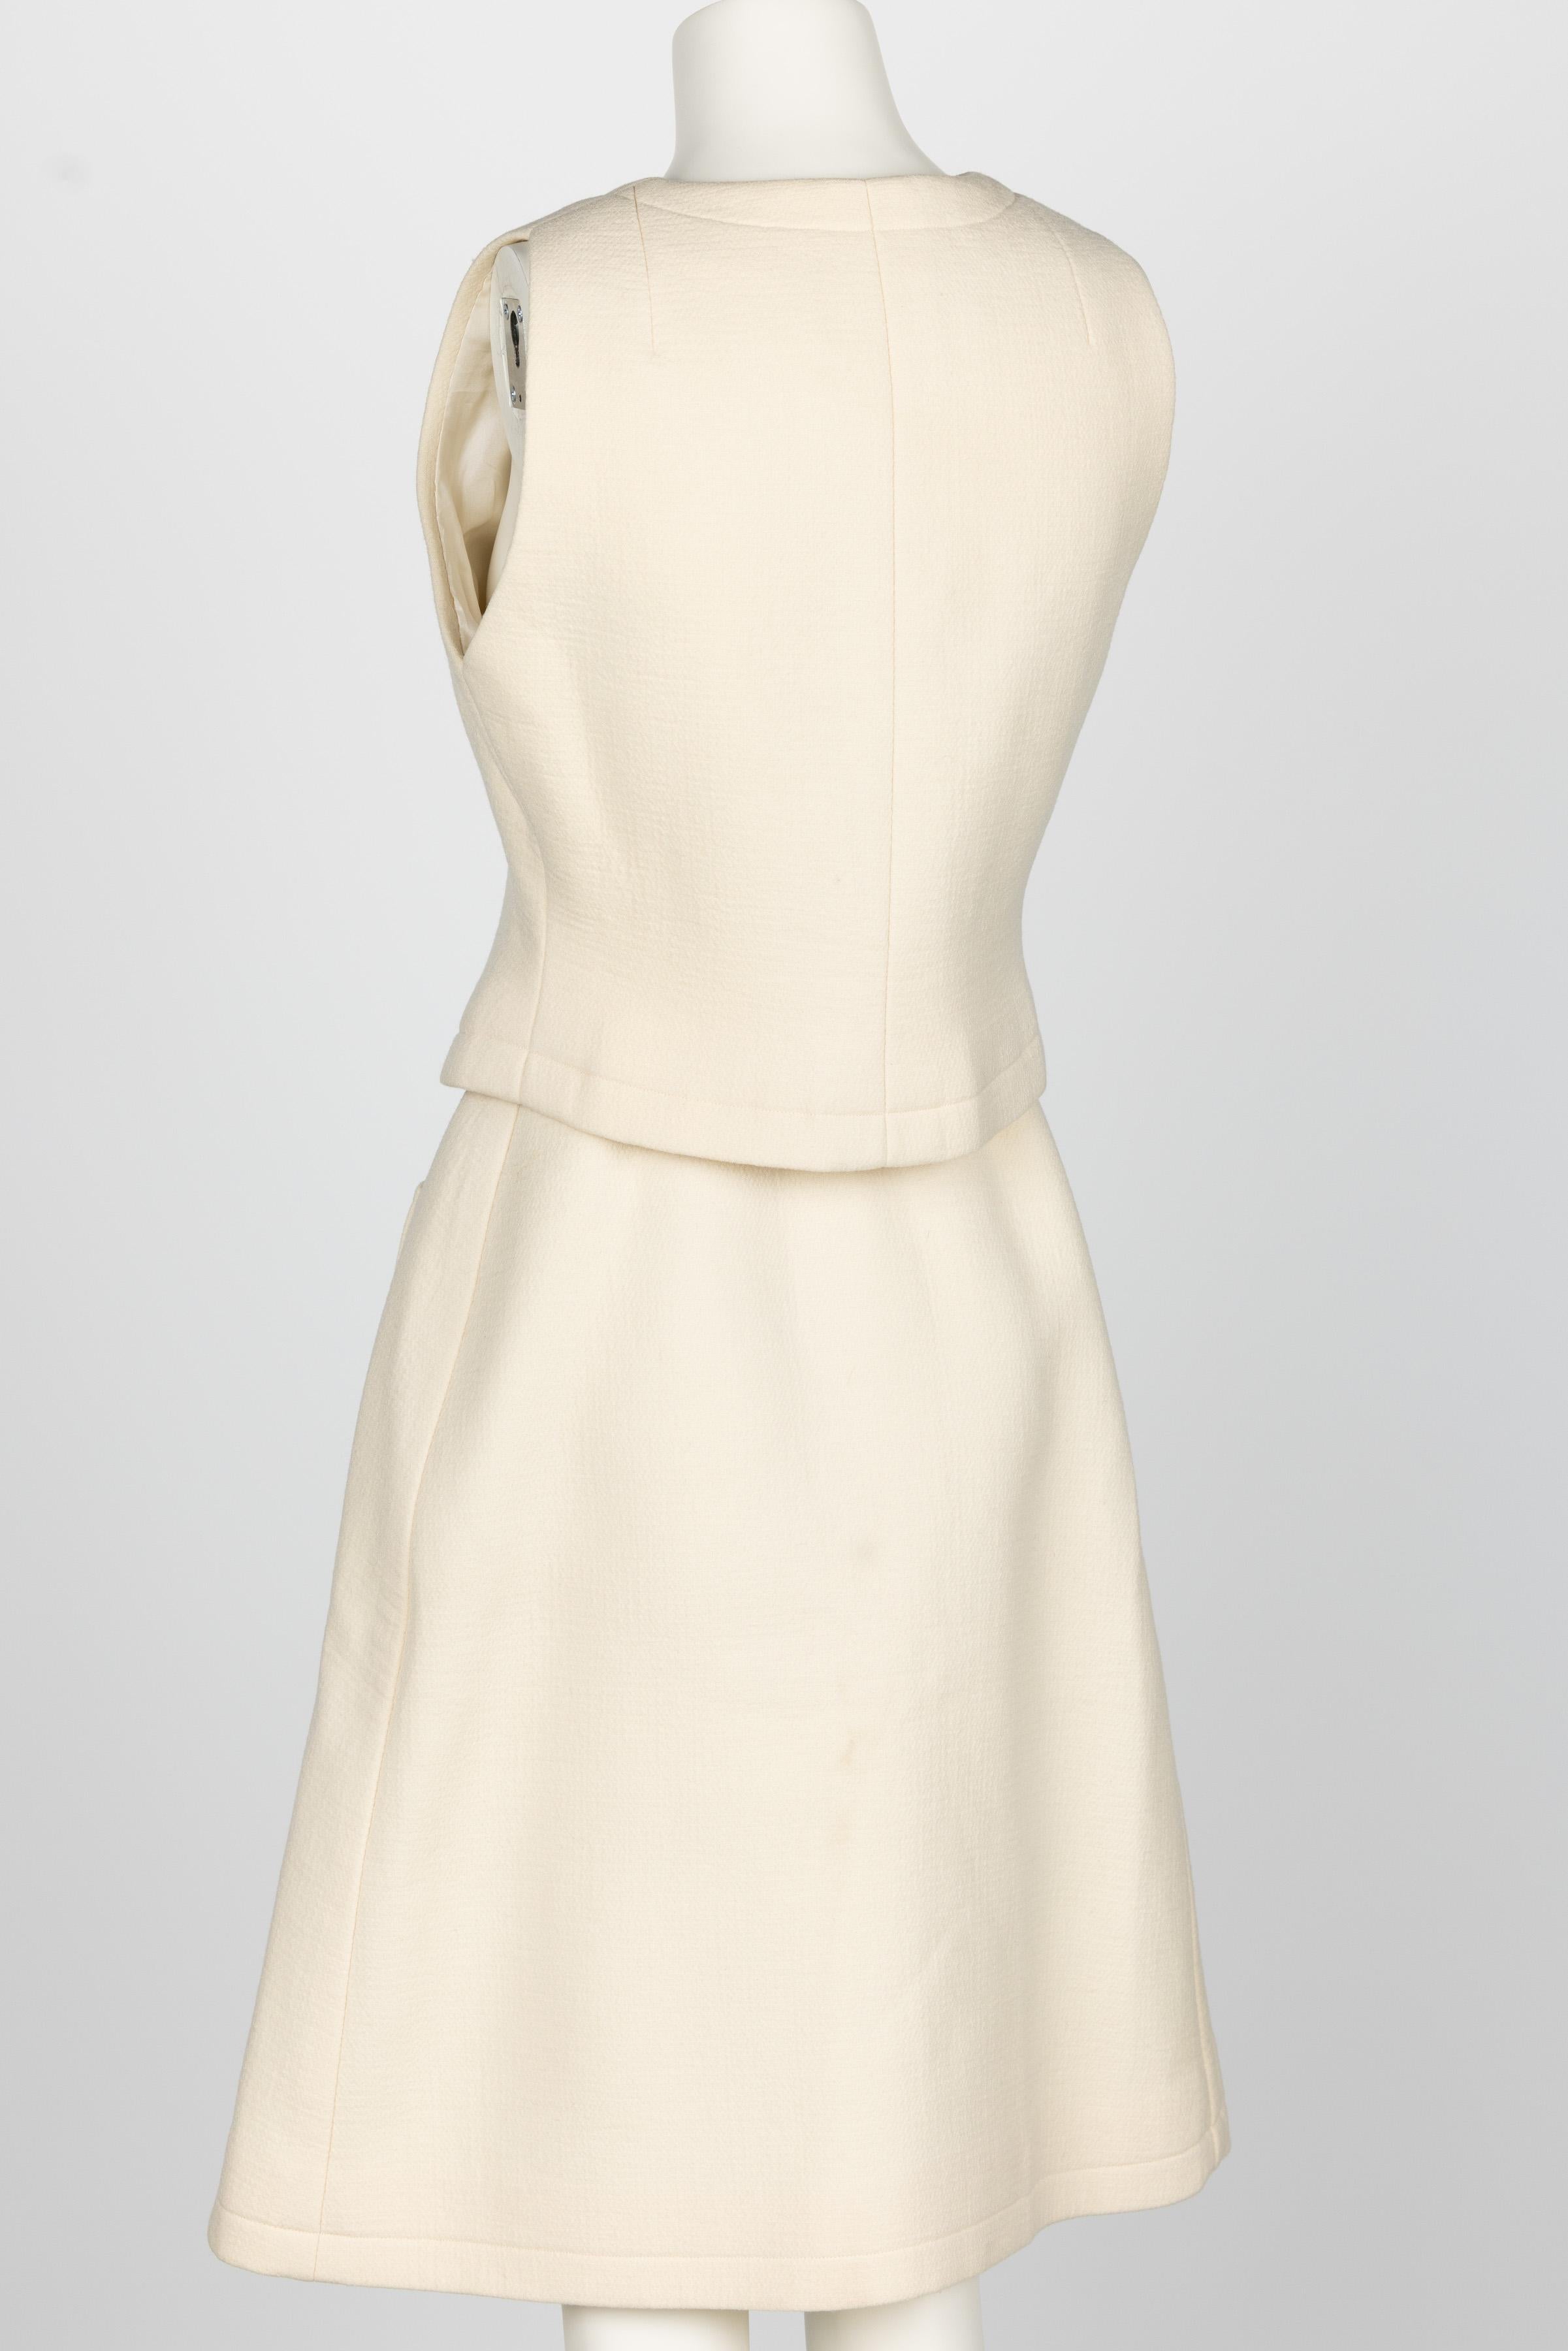 1960s Pauline Trigere Ivory & Black Tailored Vest Skirt Suit For Sale 9